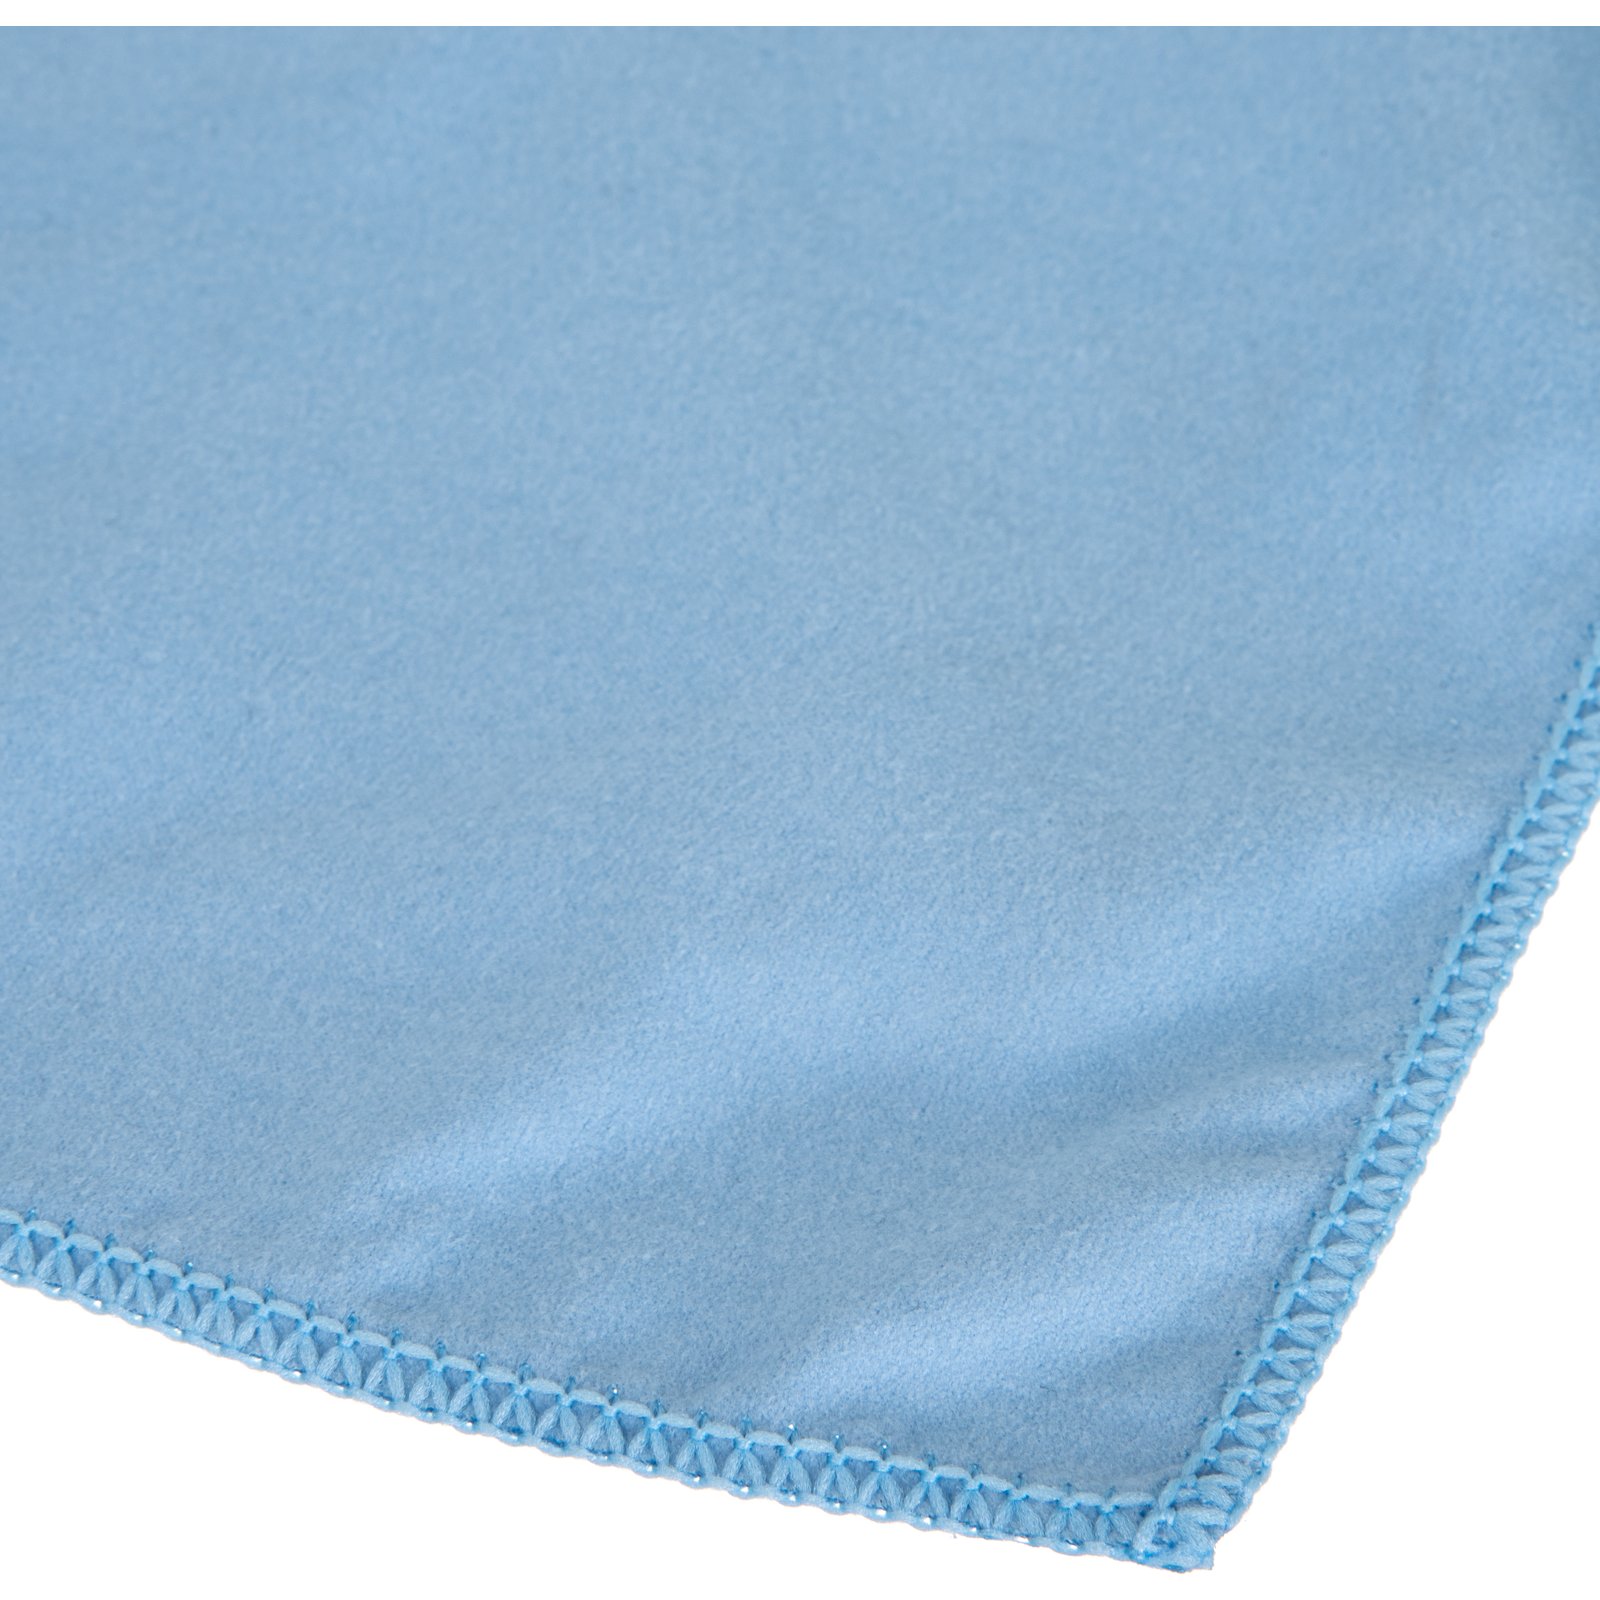 3633314 - Flo-Pac® Microfiber Fine Polishing Cloth 16 x 16 - Blue